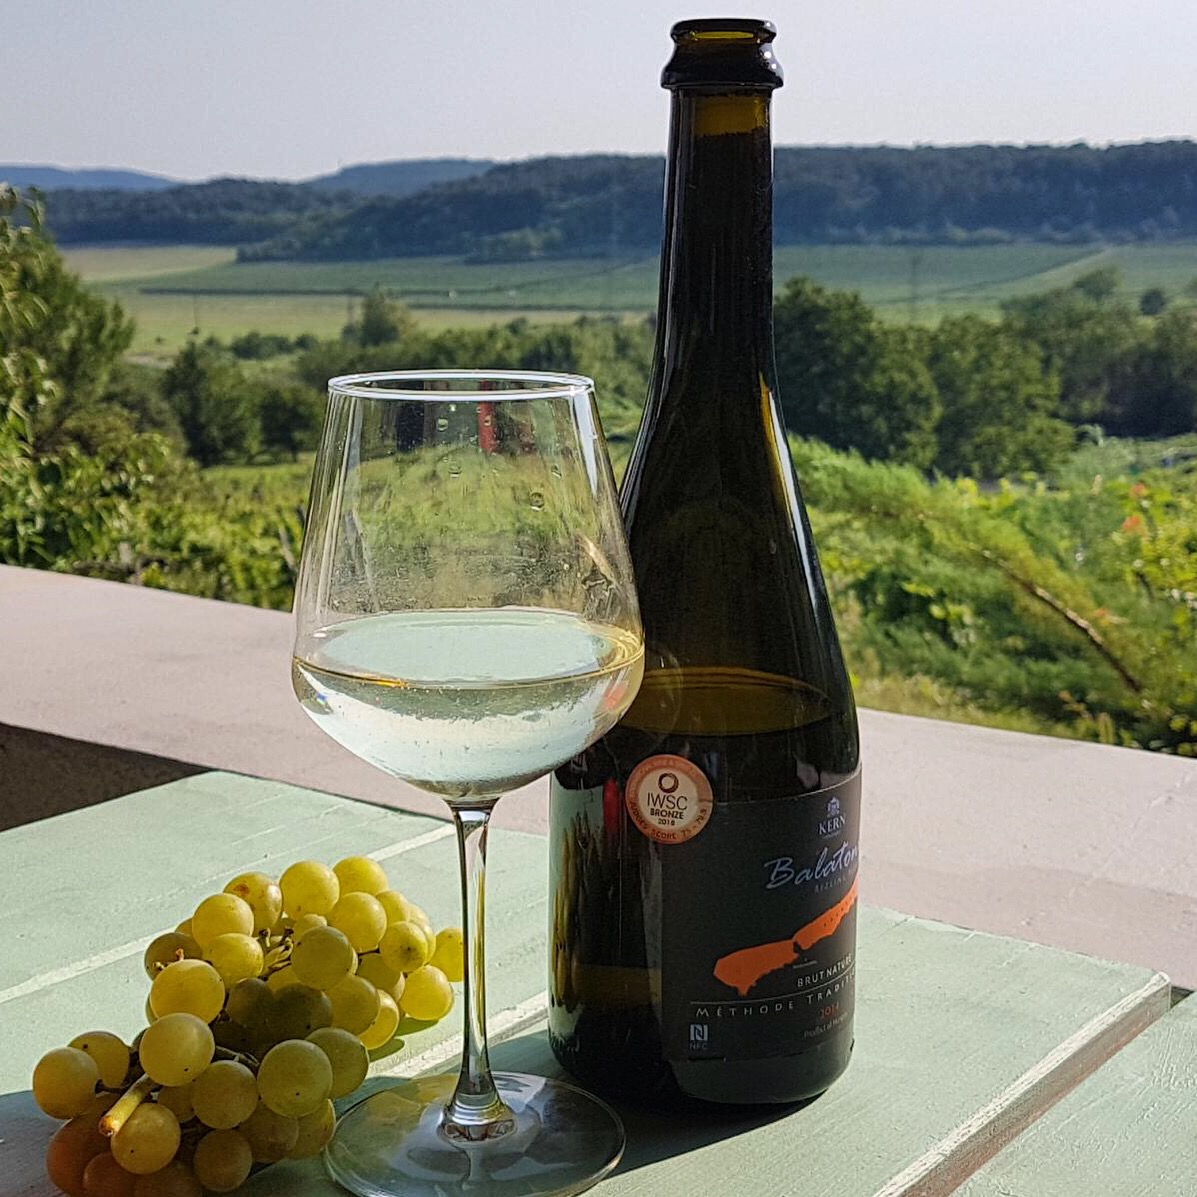 Kern Gris – Balatoni sparkling Pinot Pincészet wine